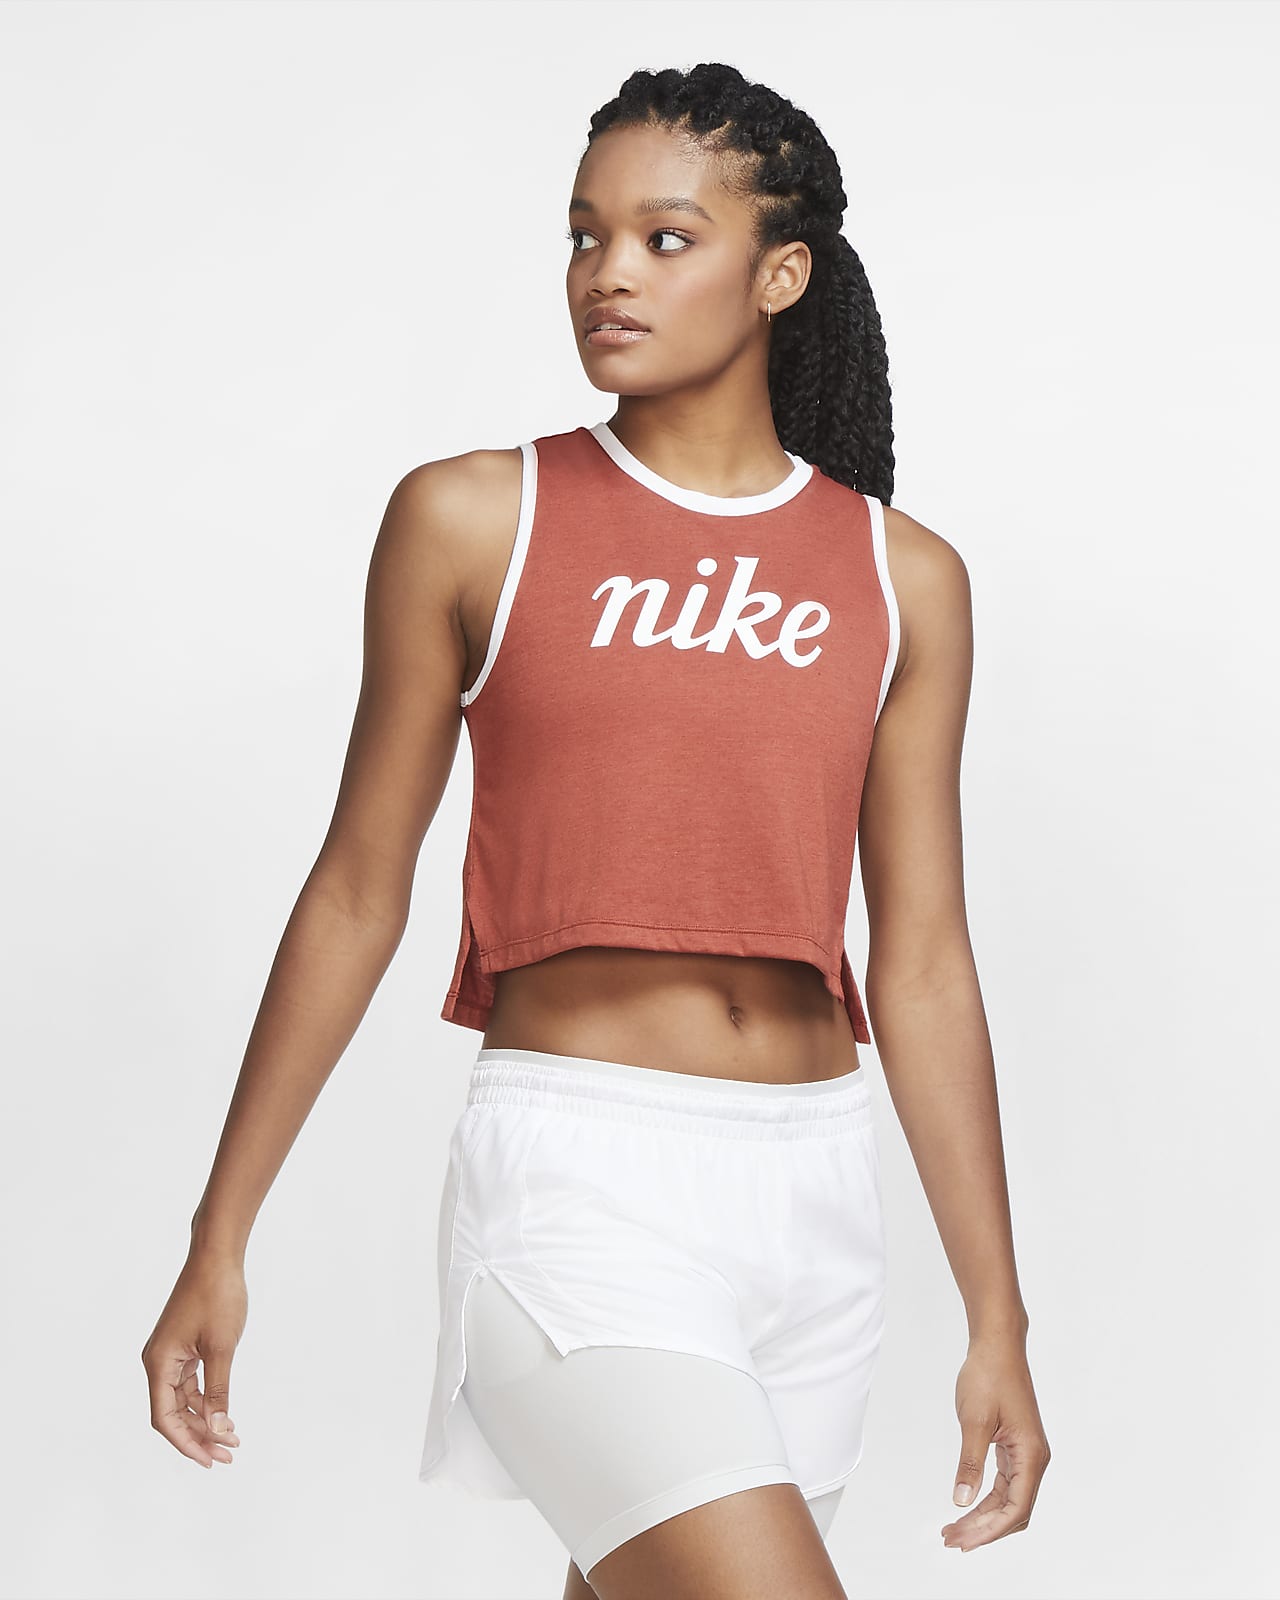 Nike Femme Women's Running Tank. Nike JP